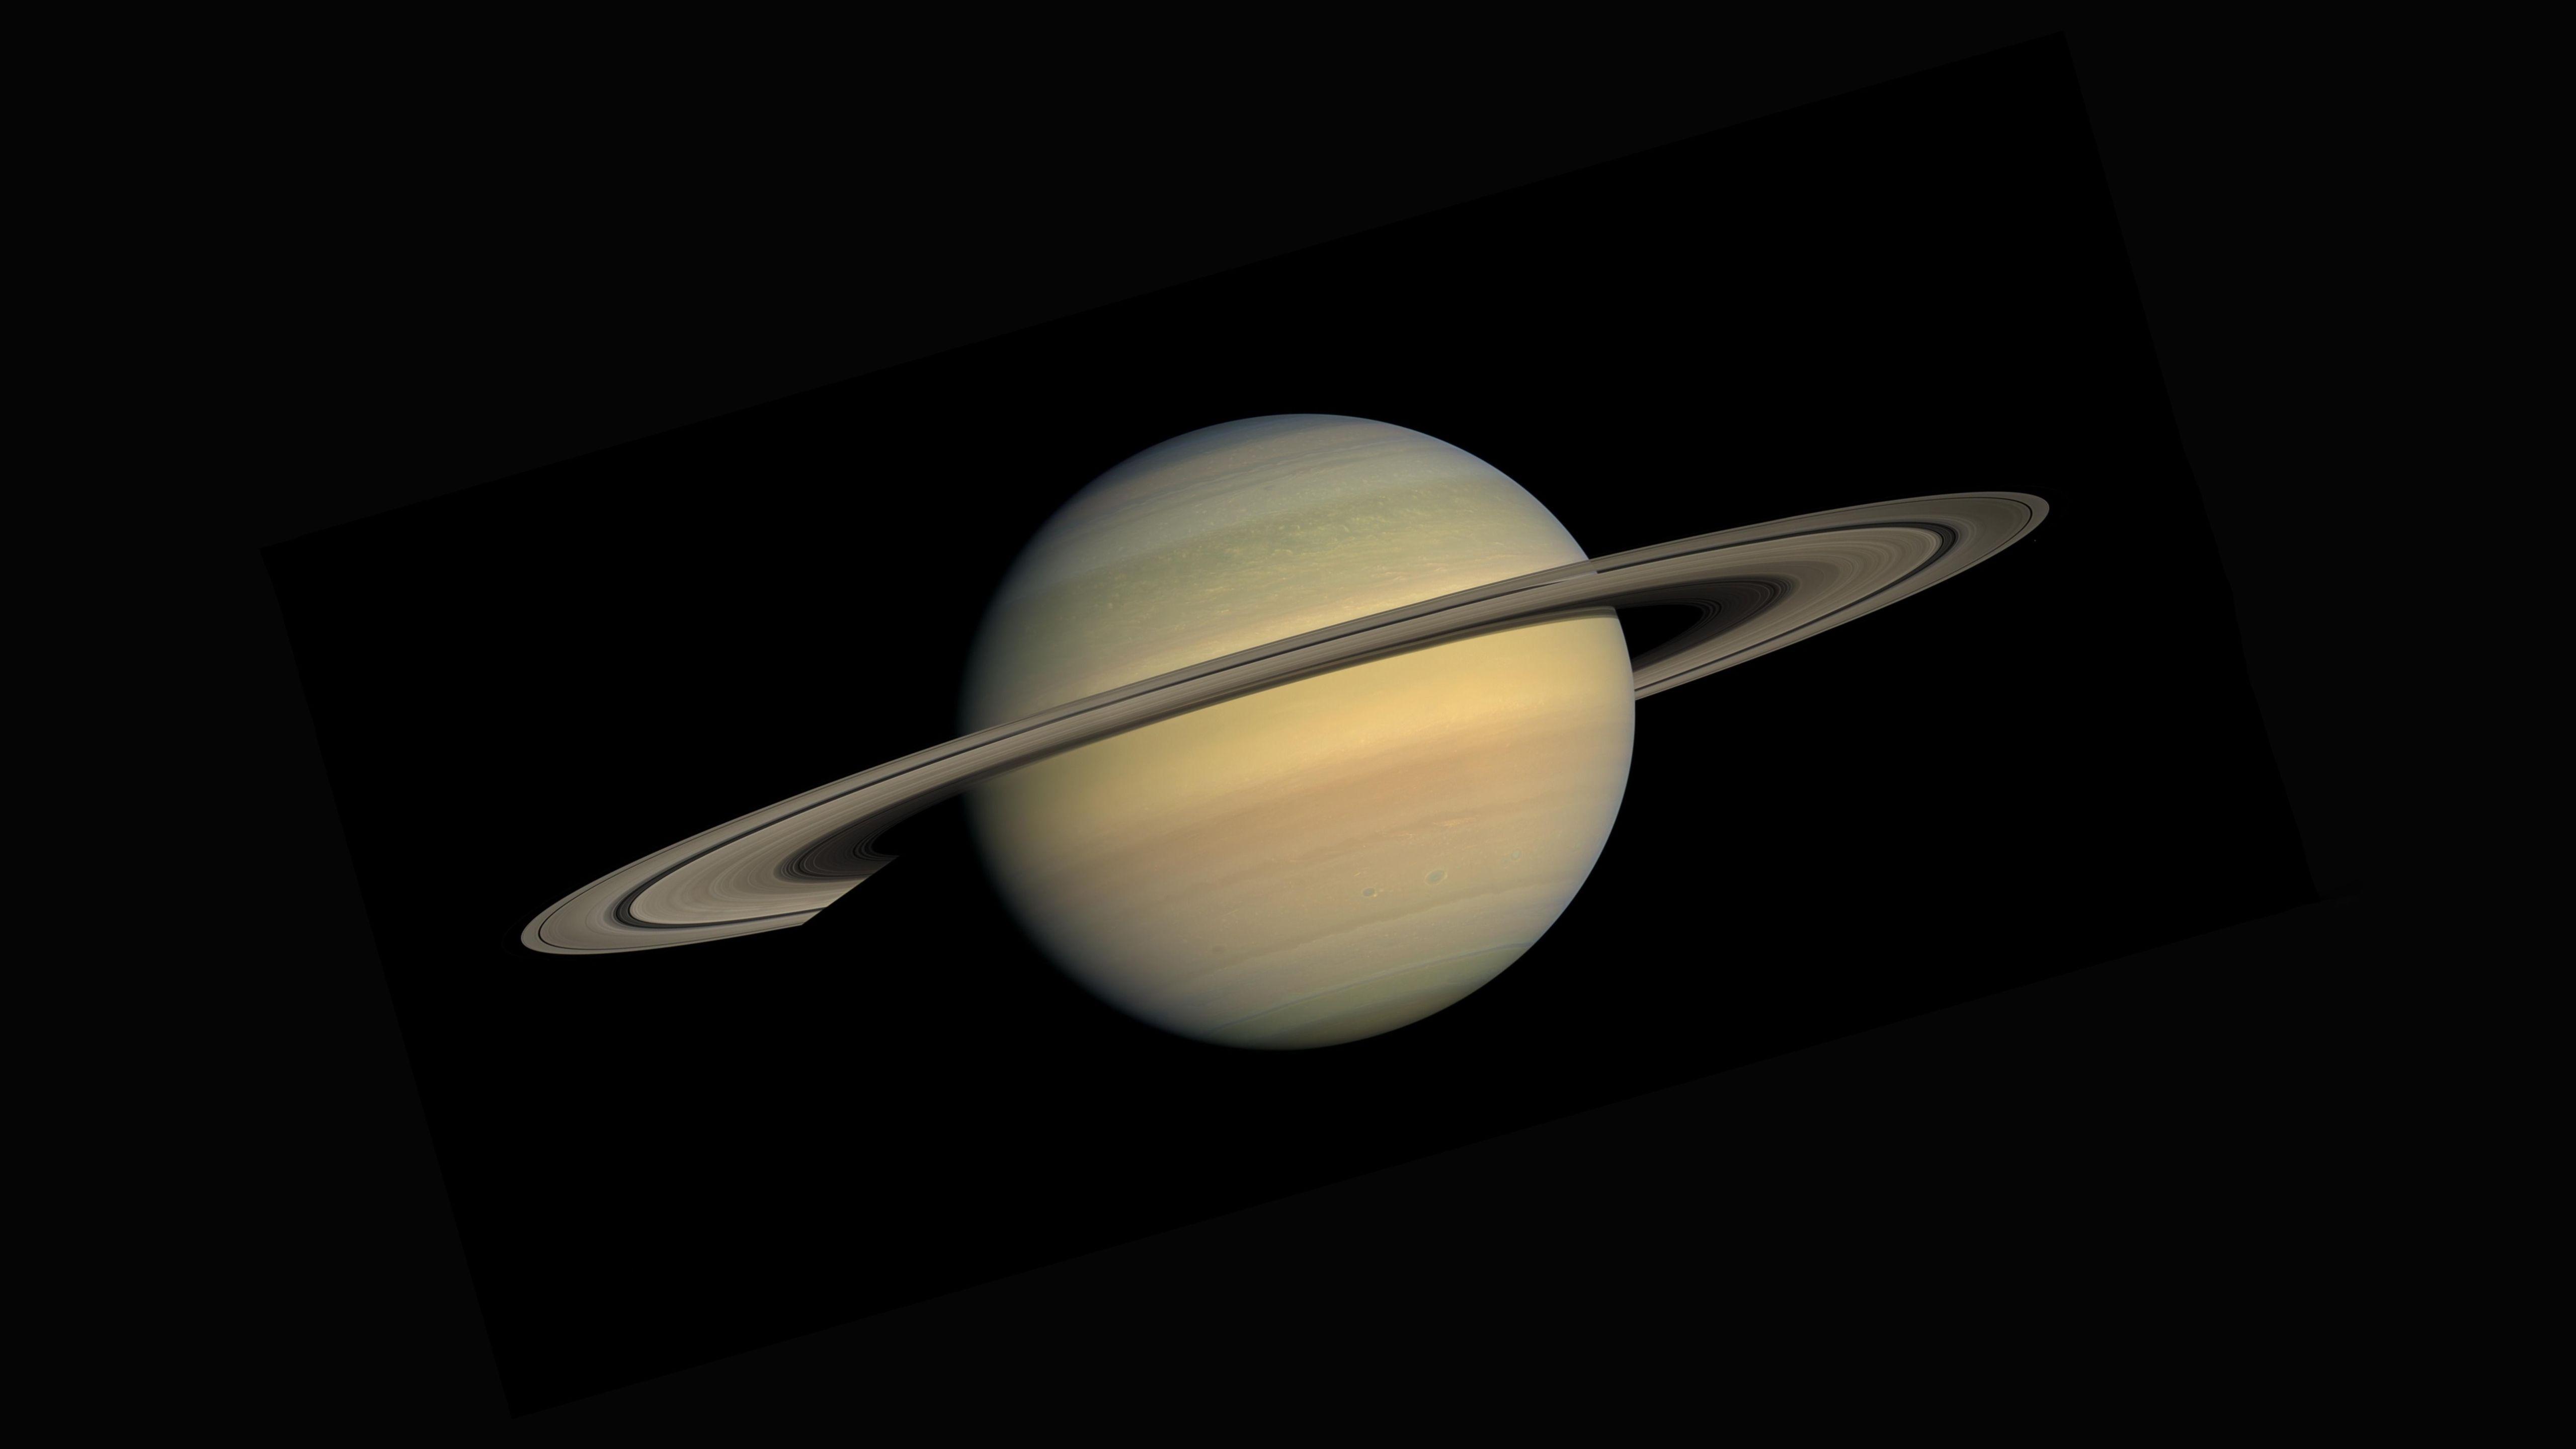 Nasa Saturn Planet Wallpapers Top Free Nasa Saturn Planet Backgrounds Wallpaperaccess 3542